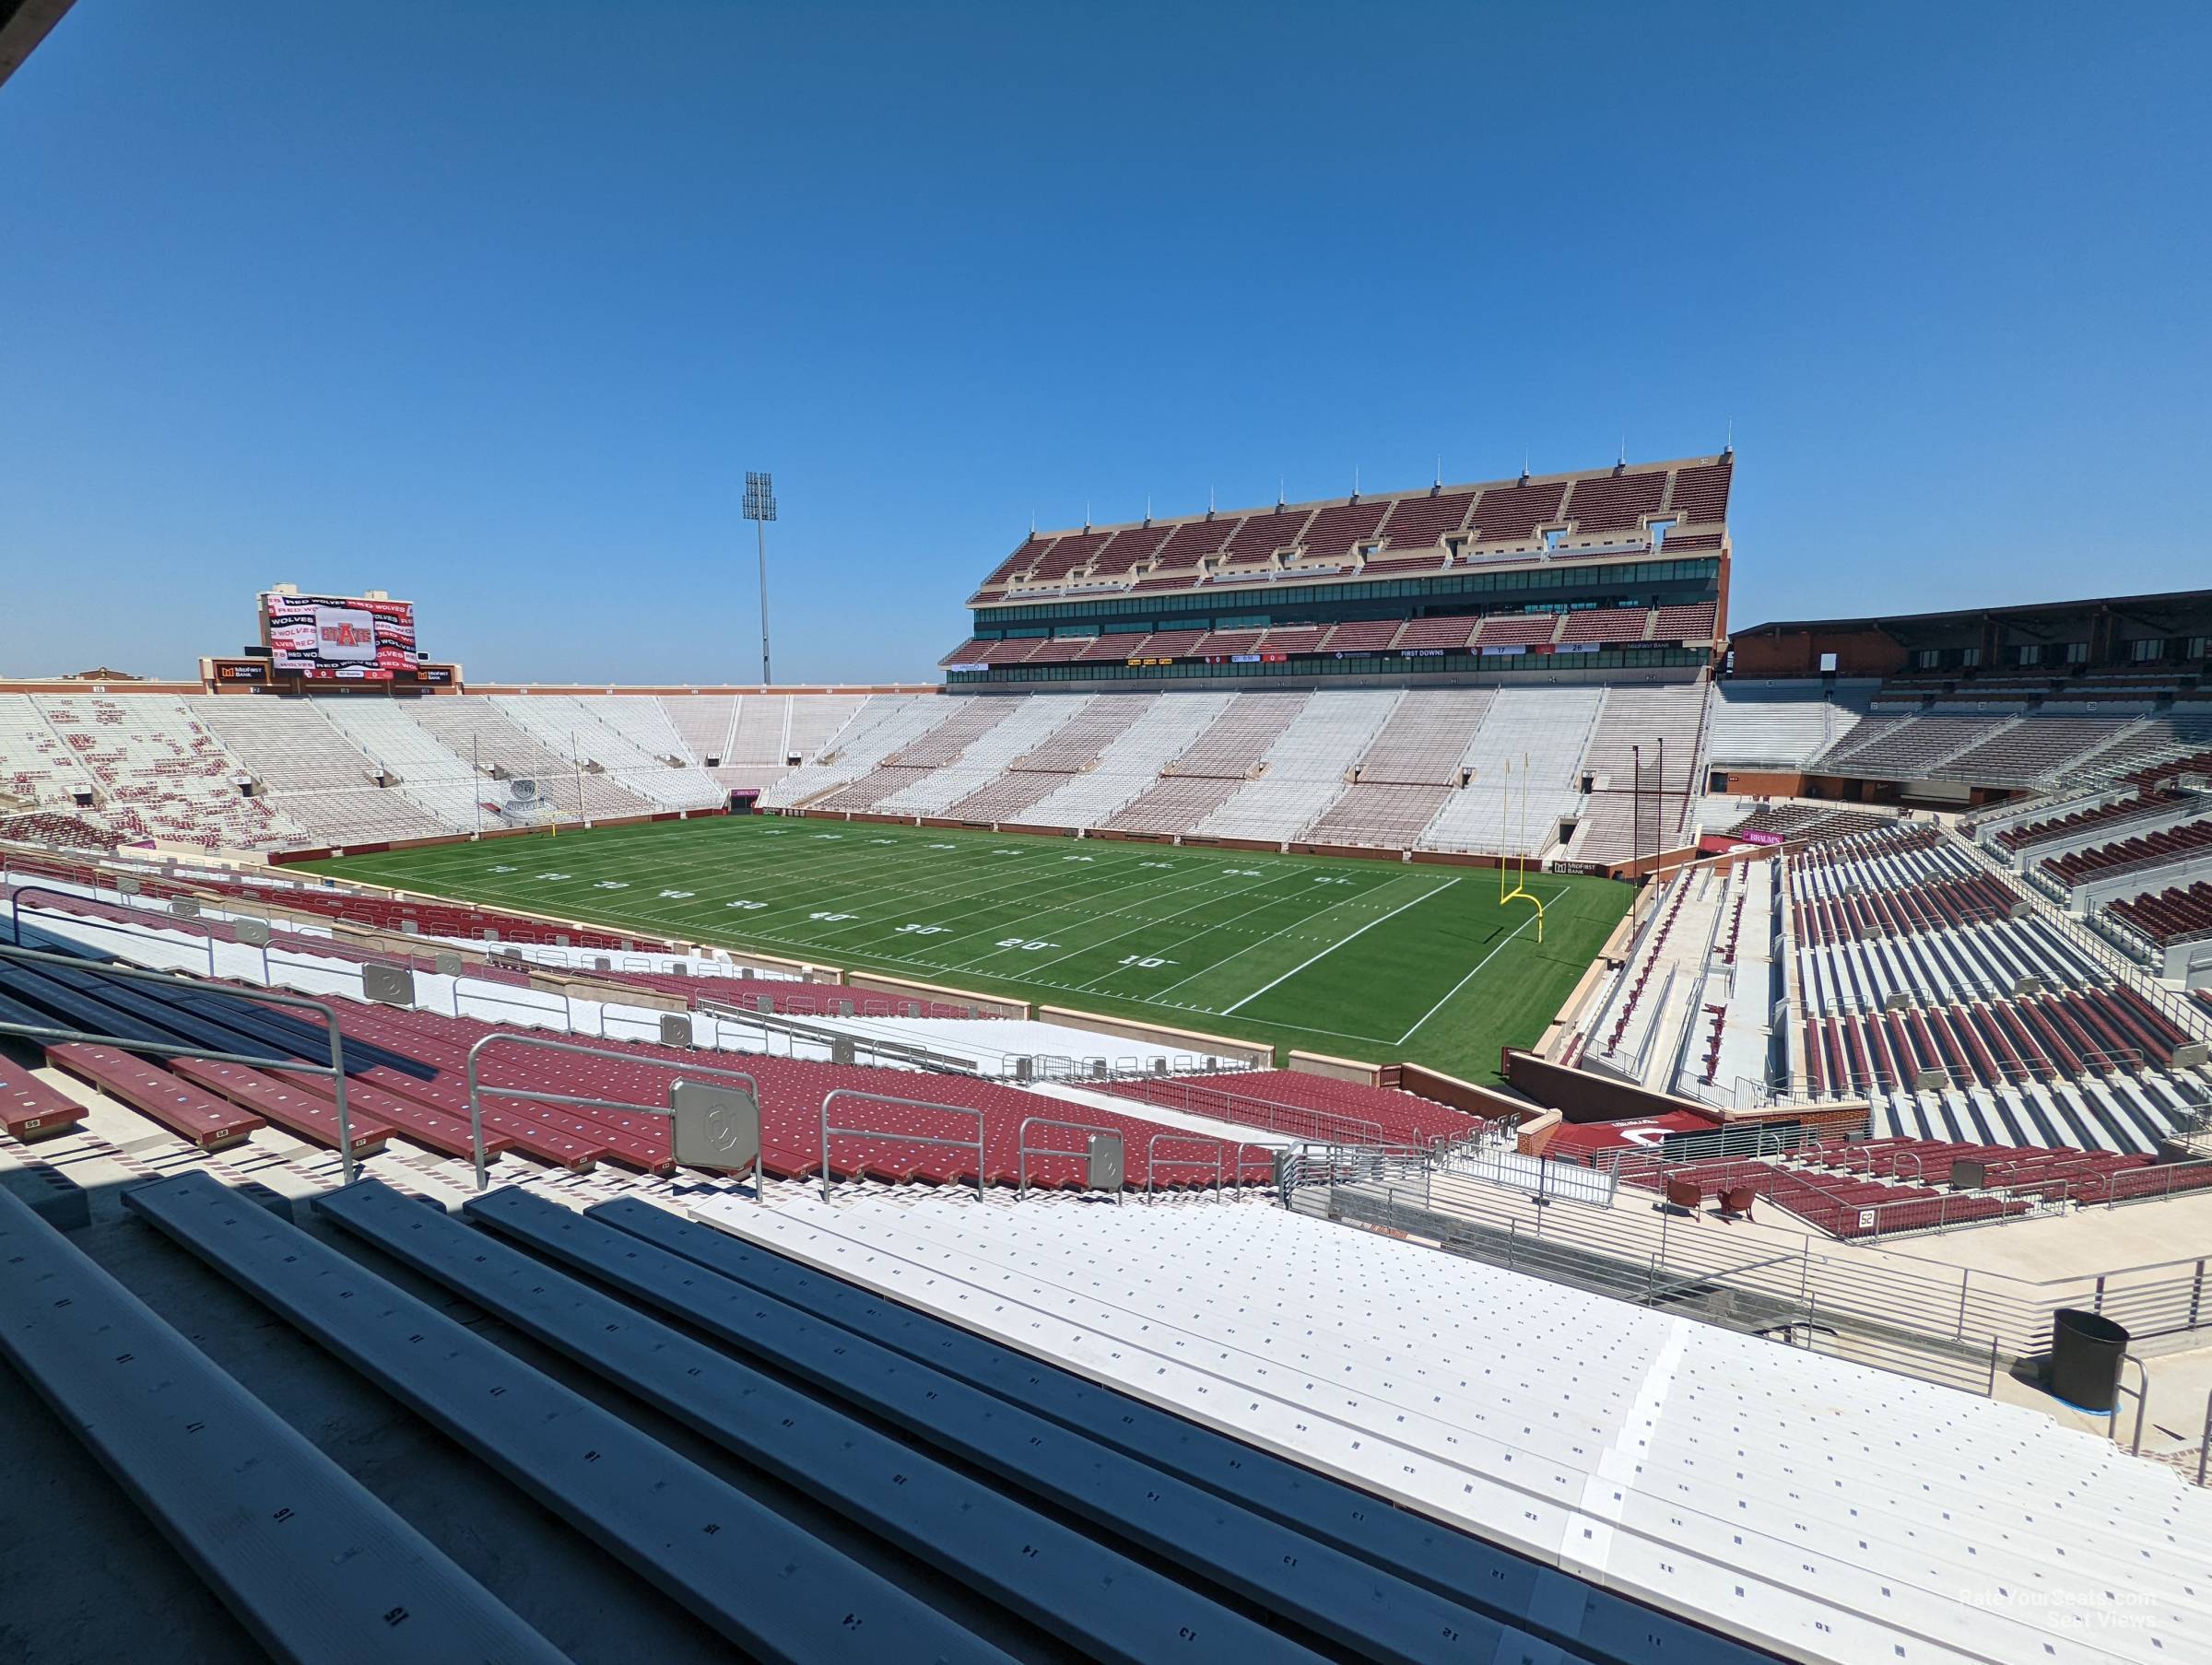 section 52, row 60 seat view  - oklahoma memorial stadium